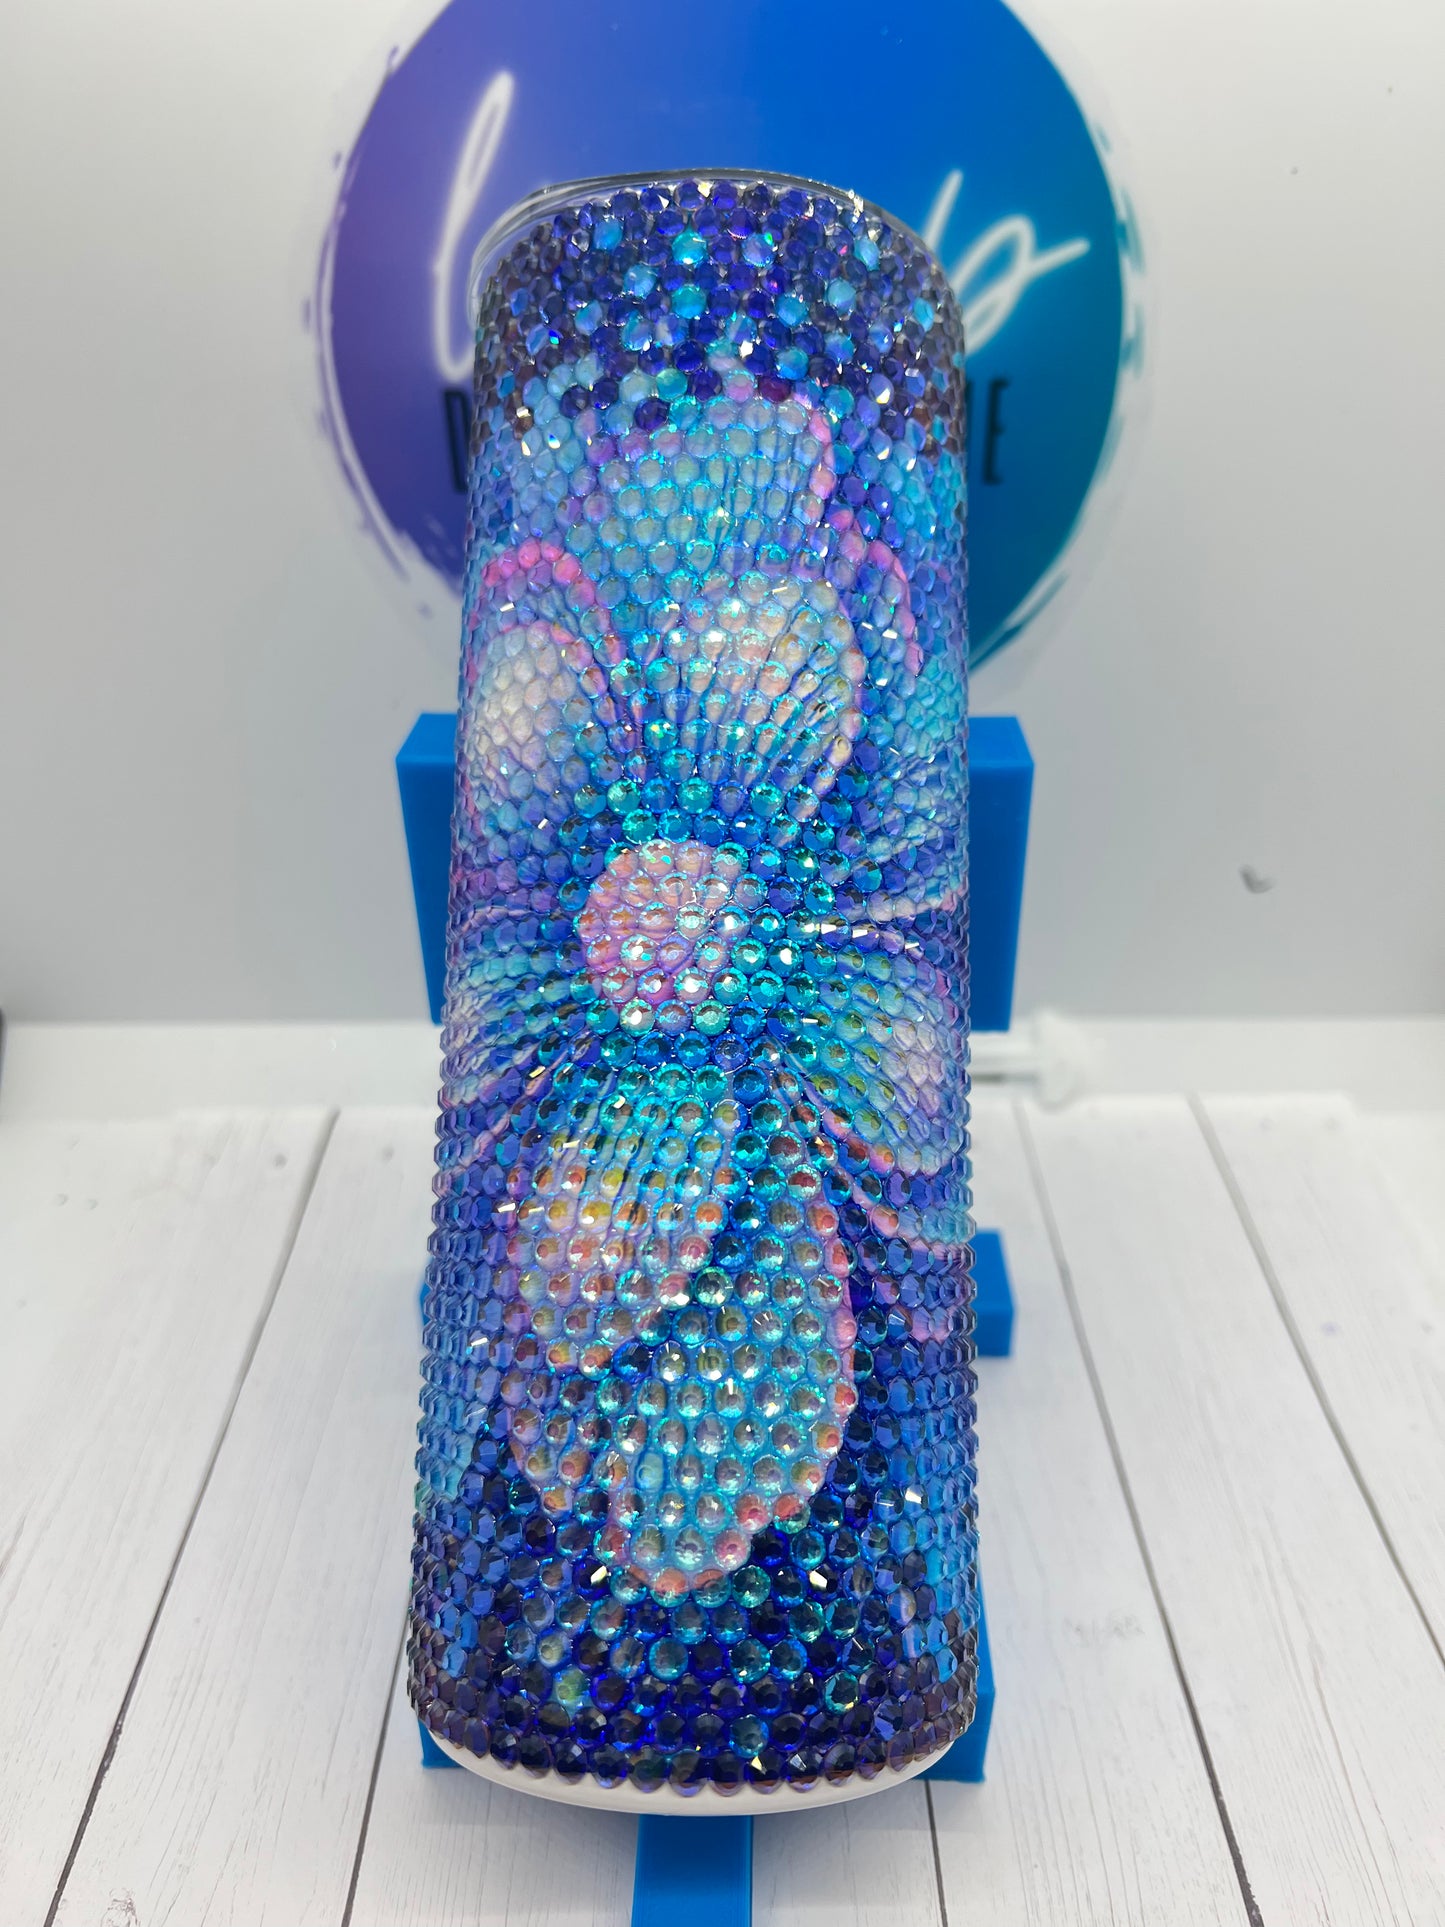 Neon blue flower - 20 oz glass